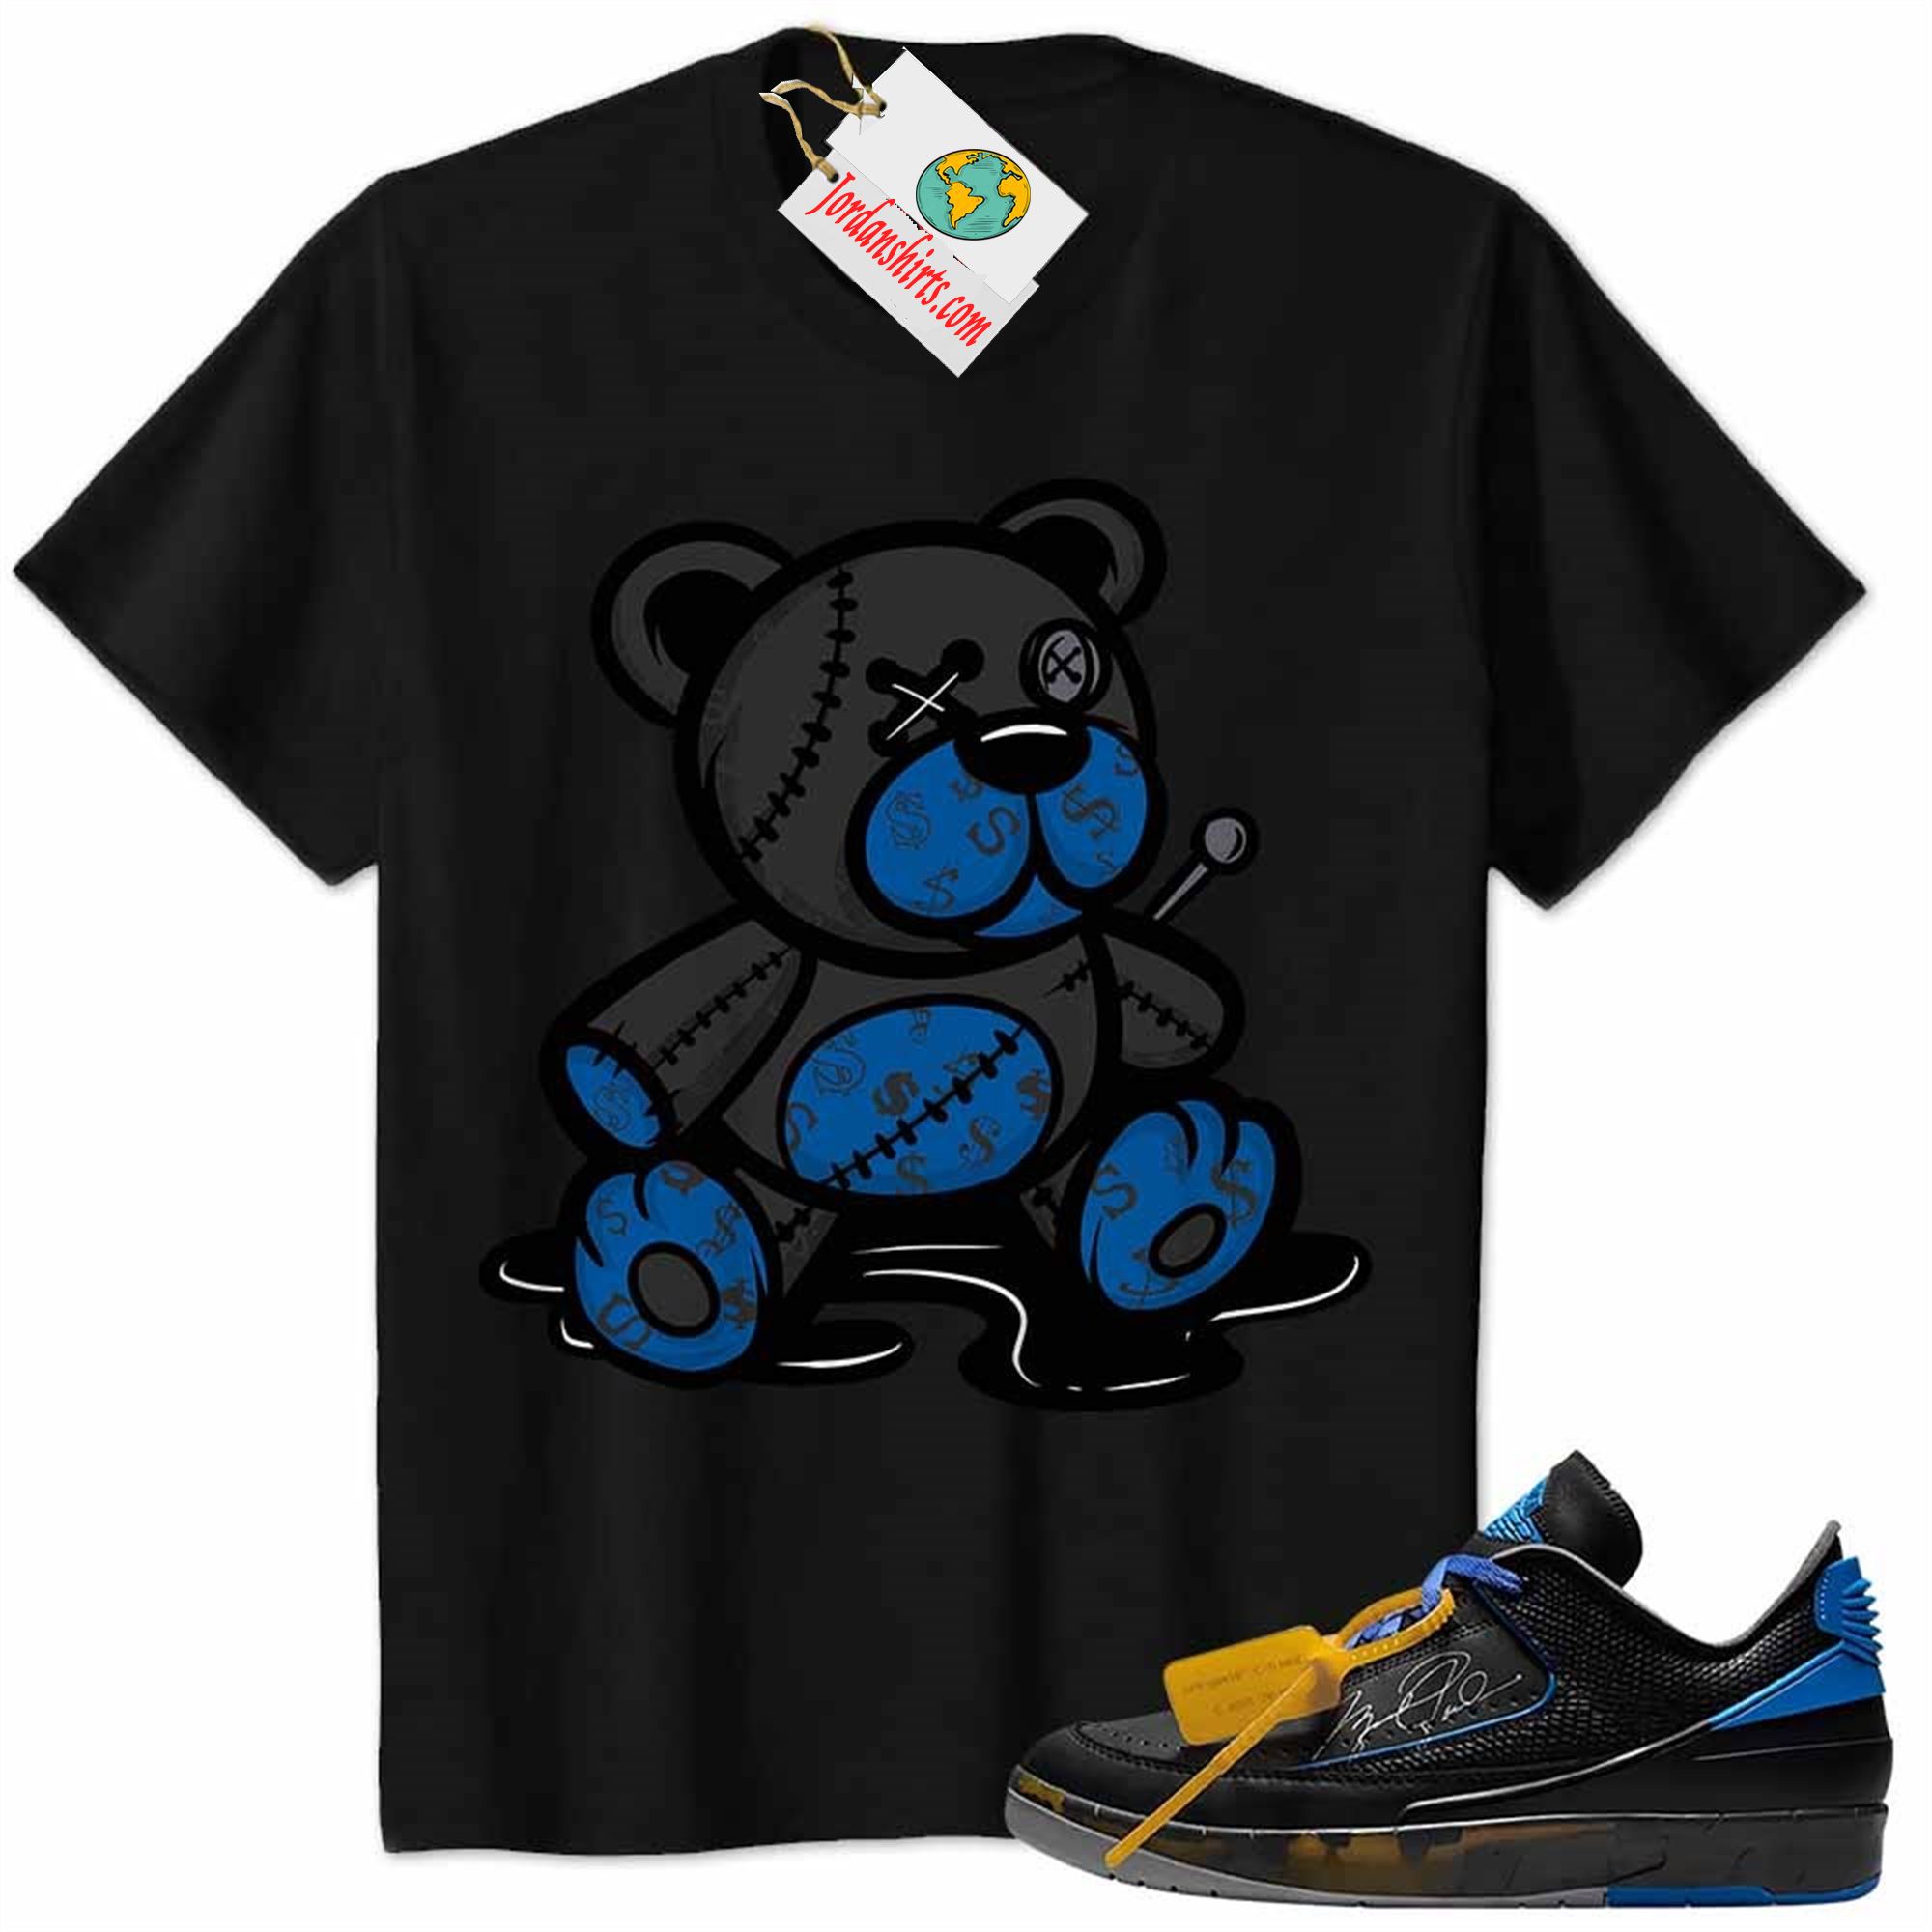 Jordan 2 Shirt, Jordan 2 Low X Off-white Black And Varsity Royal Shirt Teddy Bear All Money In Black Size Up To 5xl